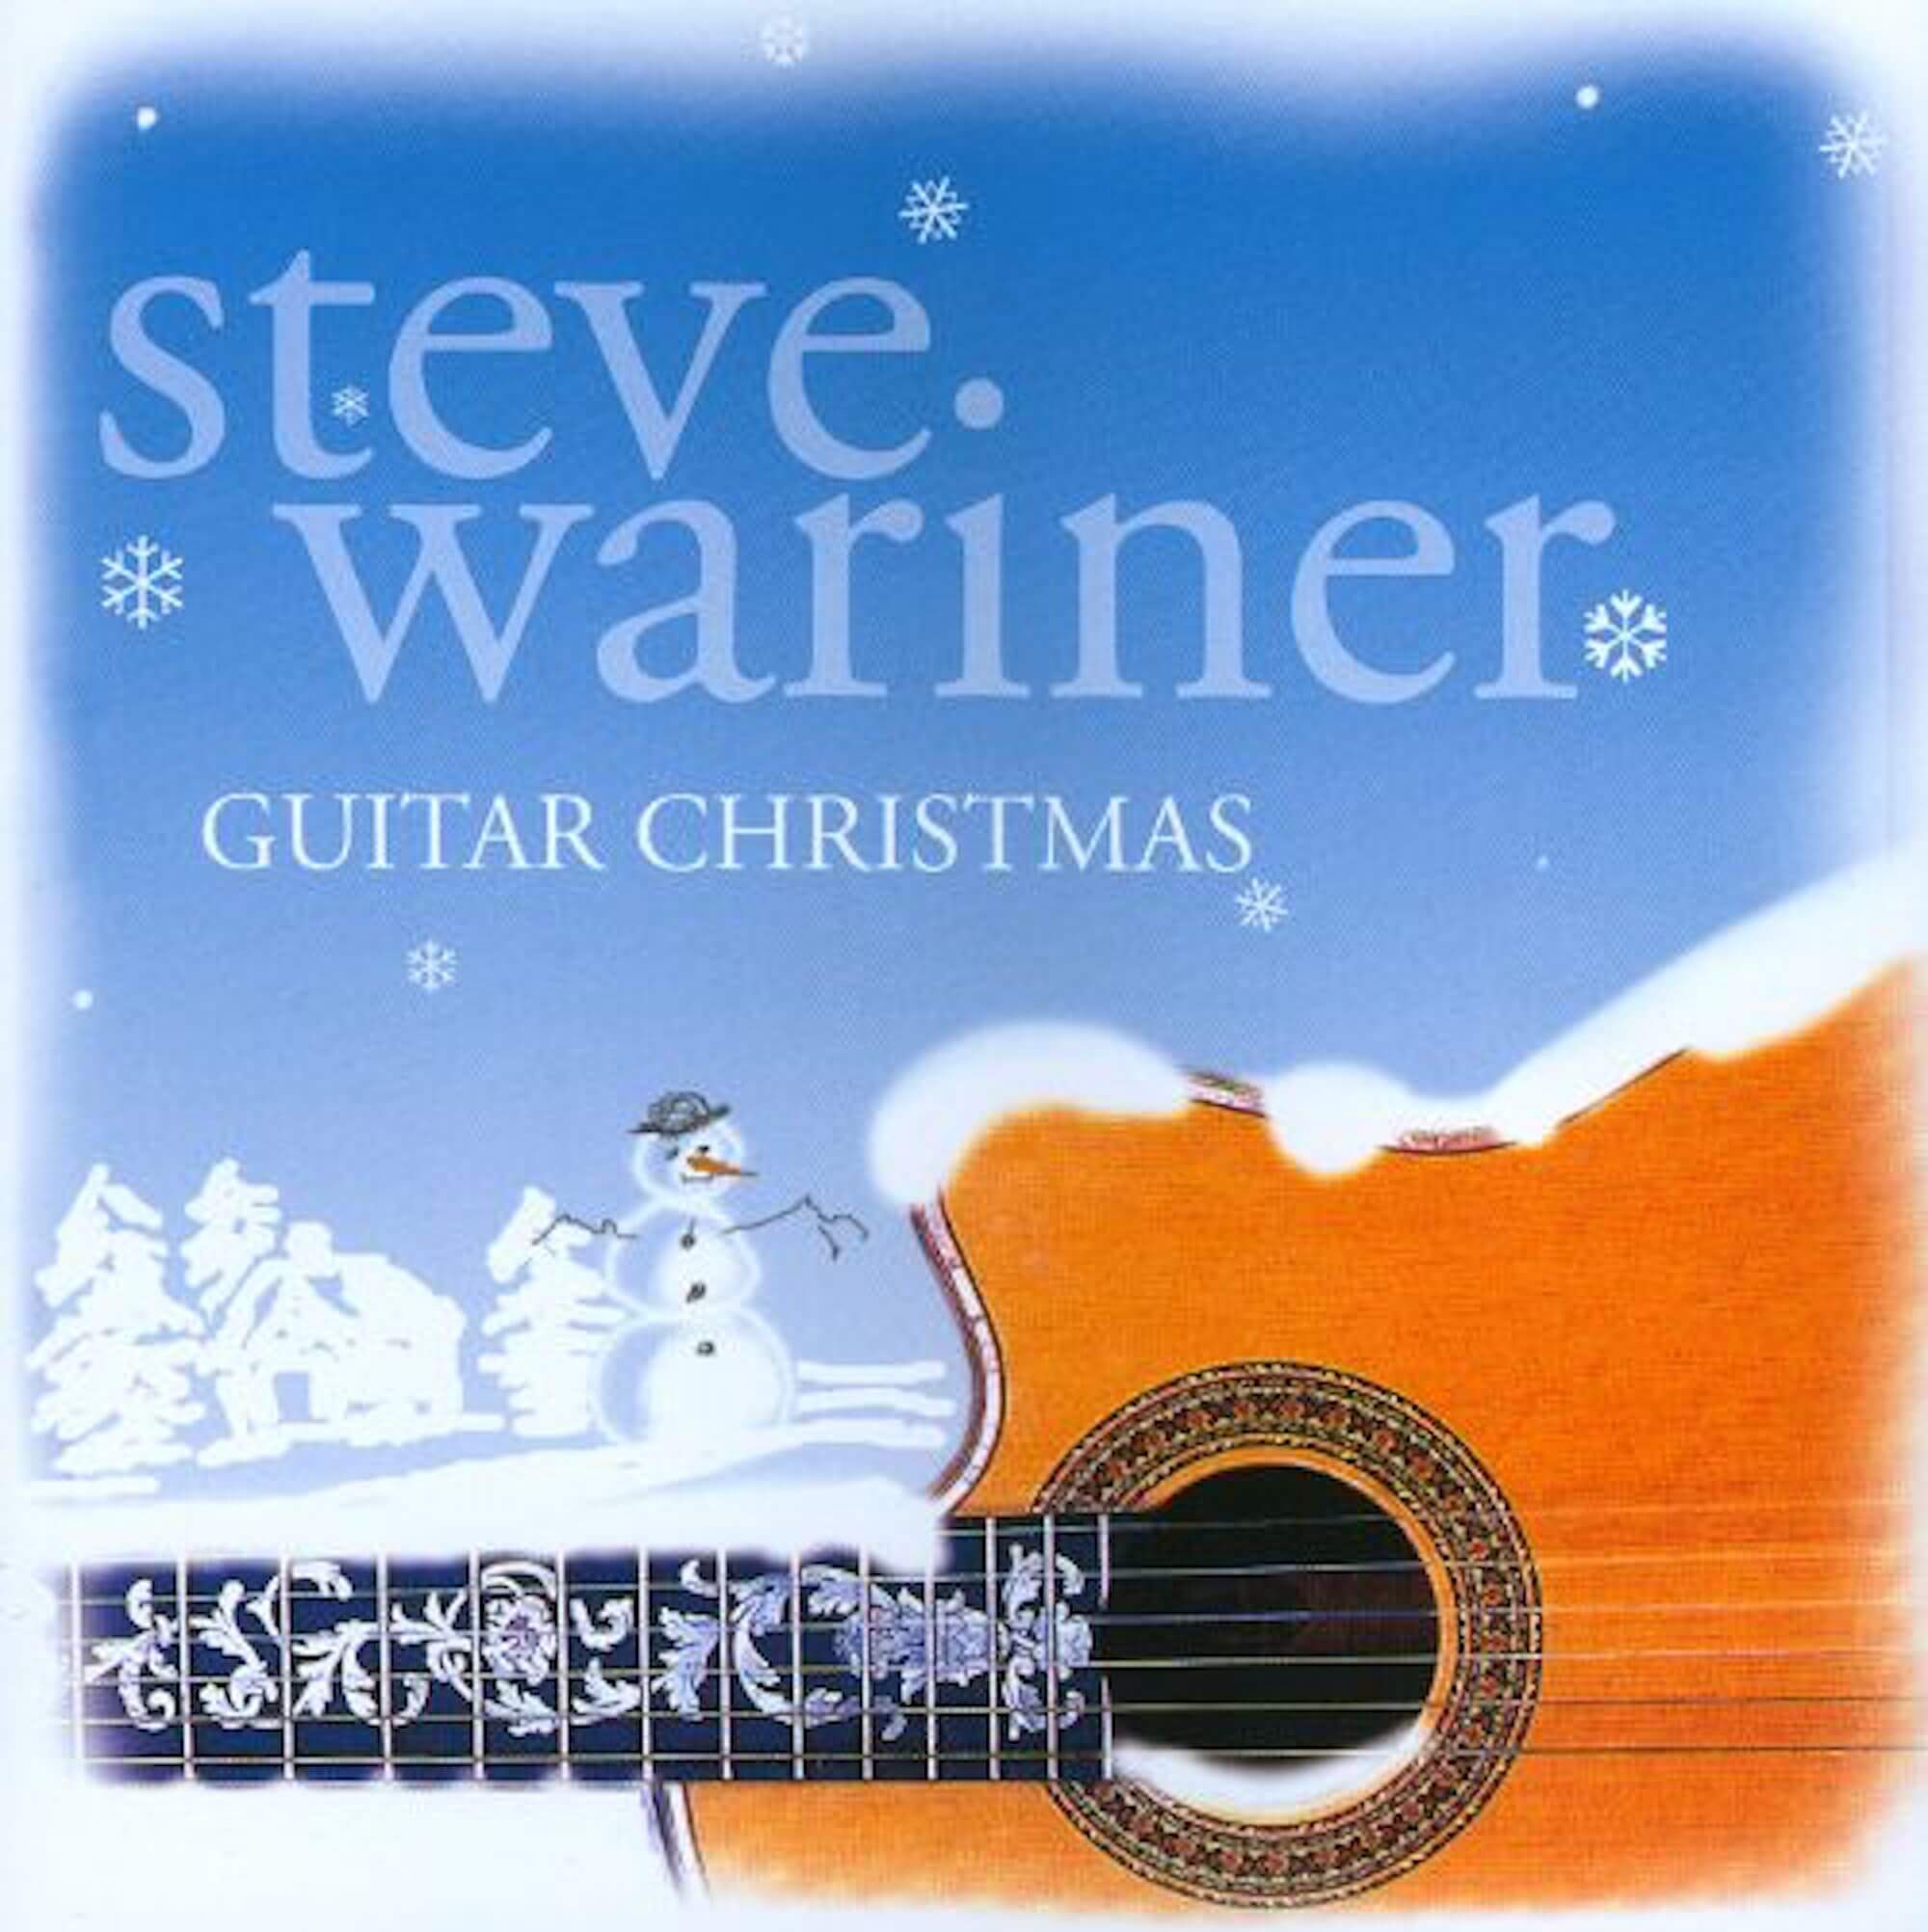 Guitar Christmas - Steve Wariner .jpg